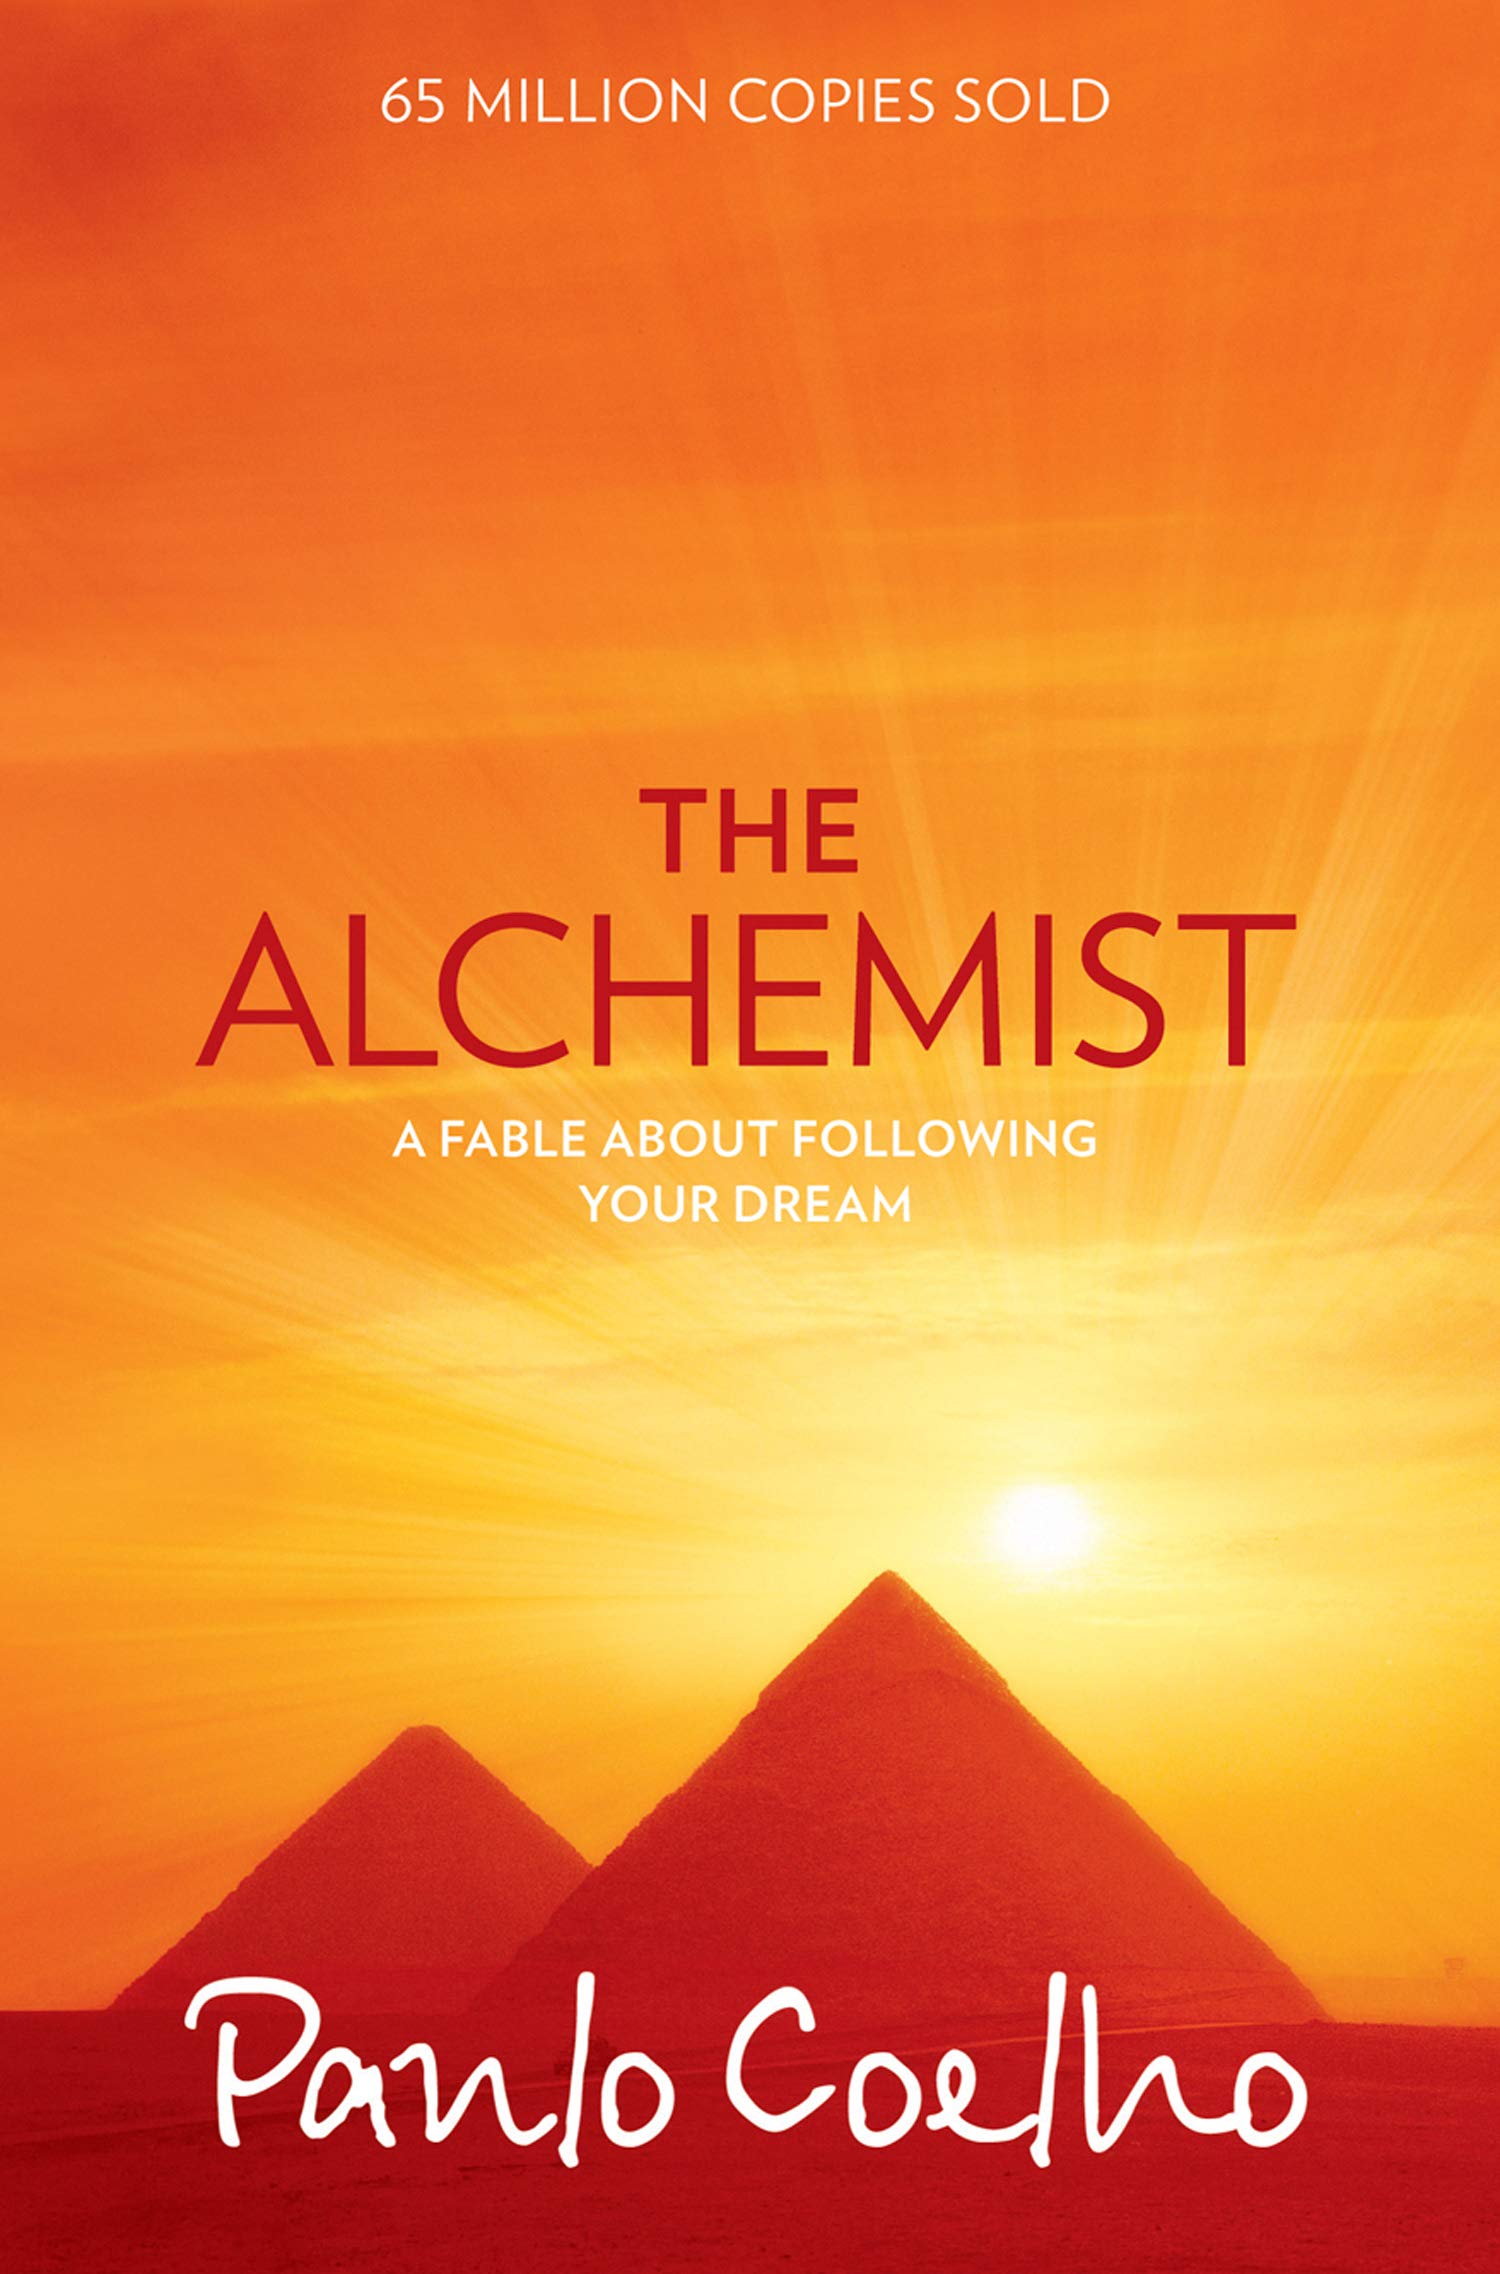 The Alchemist Book Written by Paulo Coelho